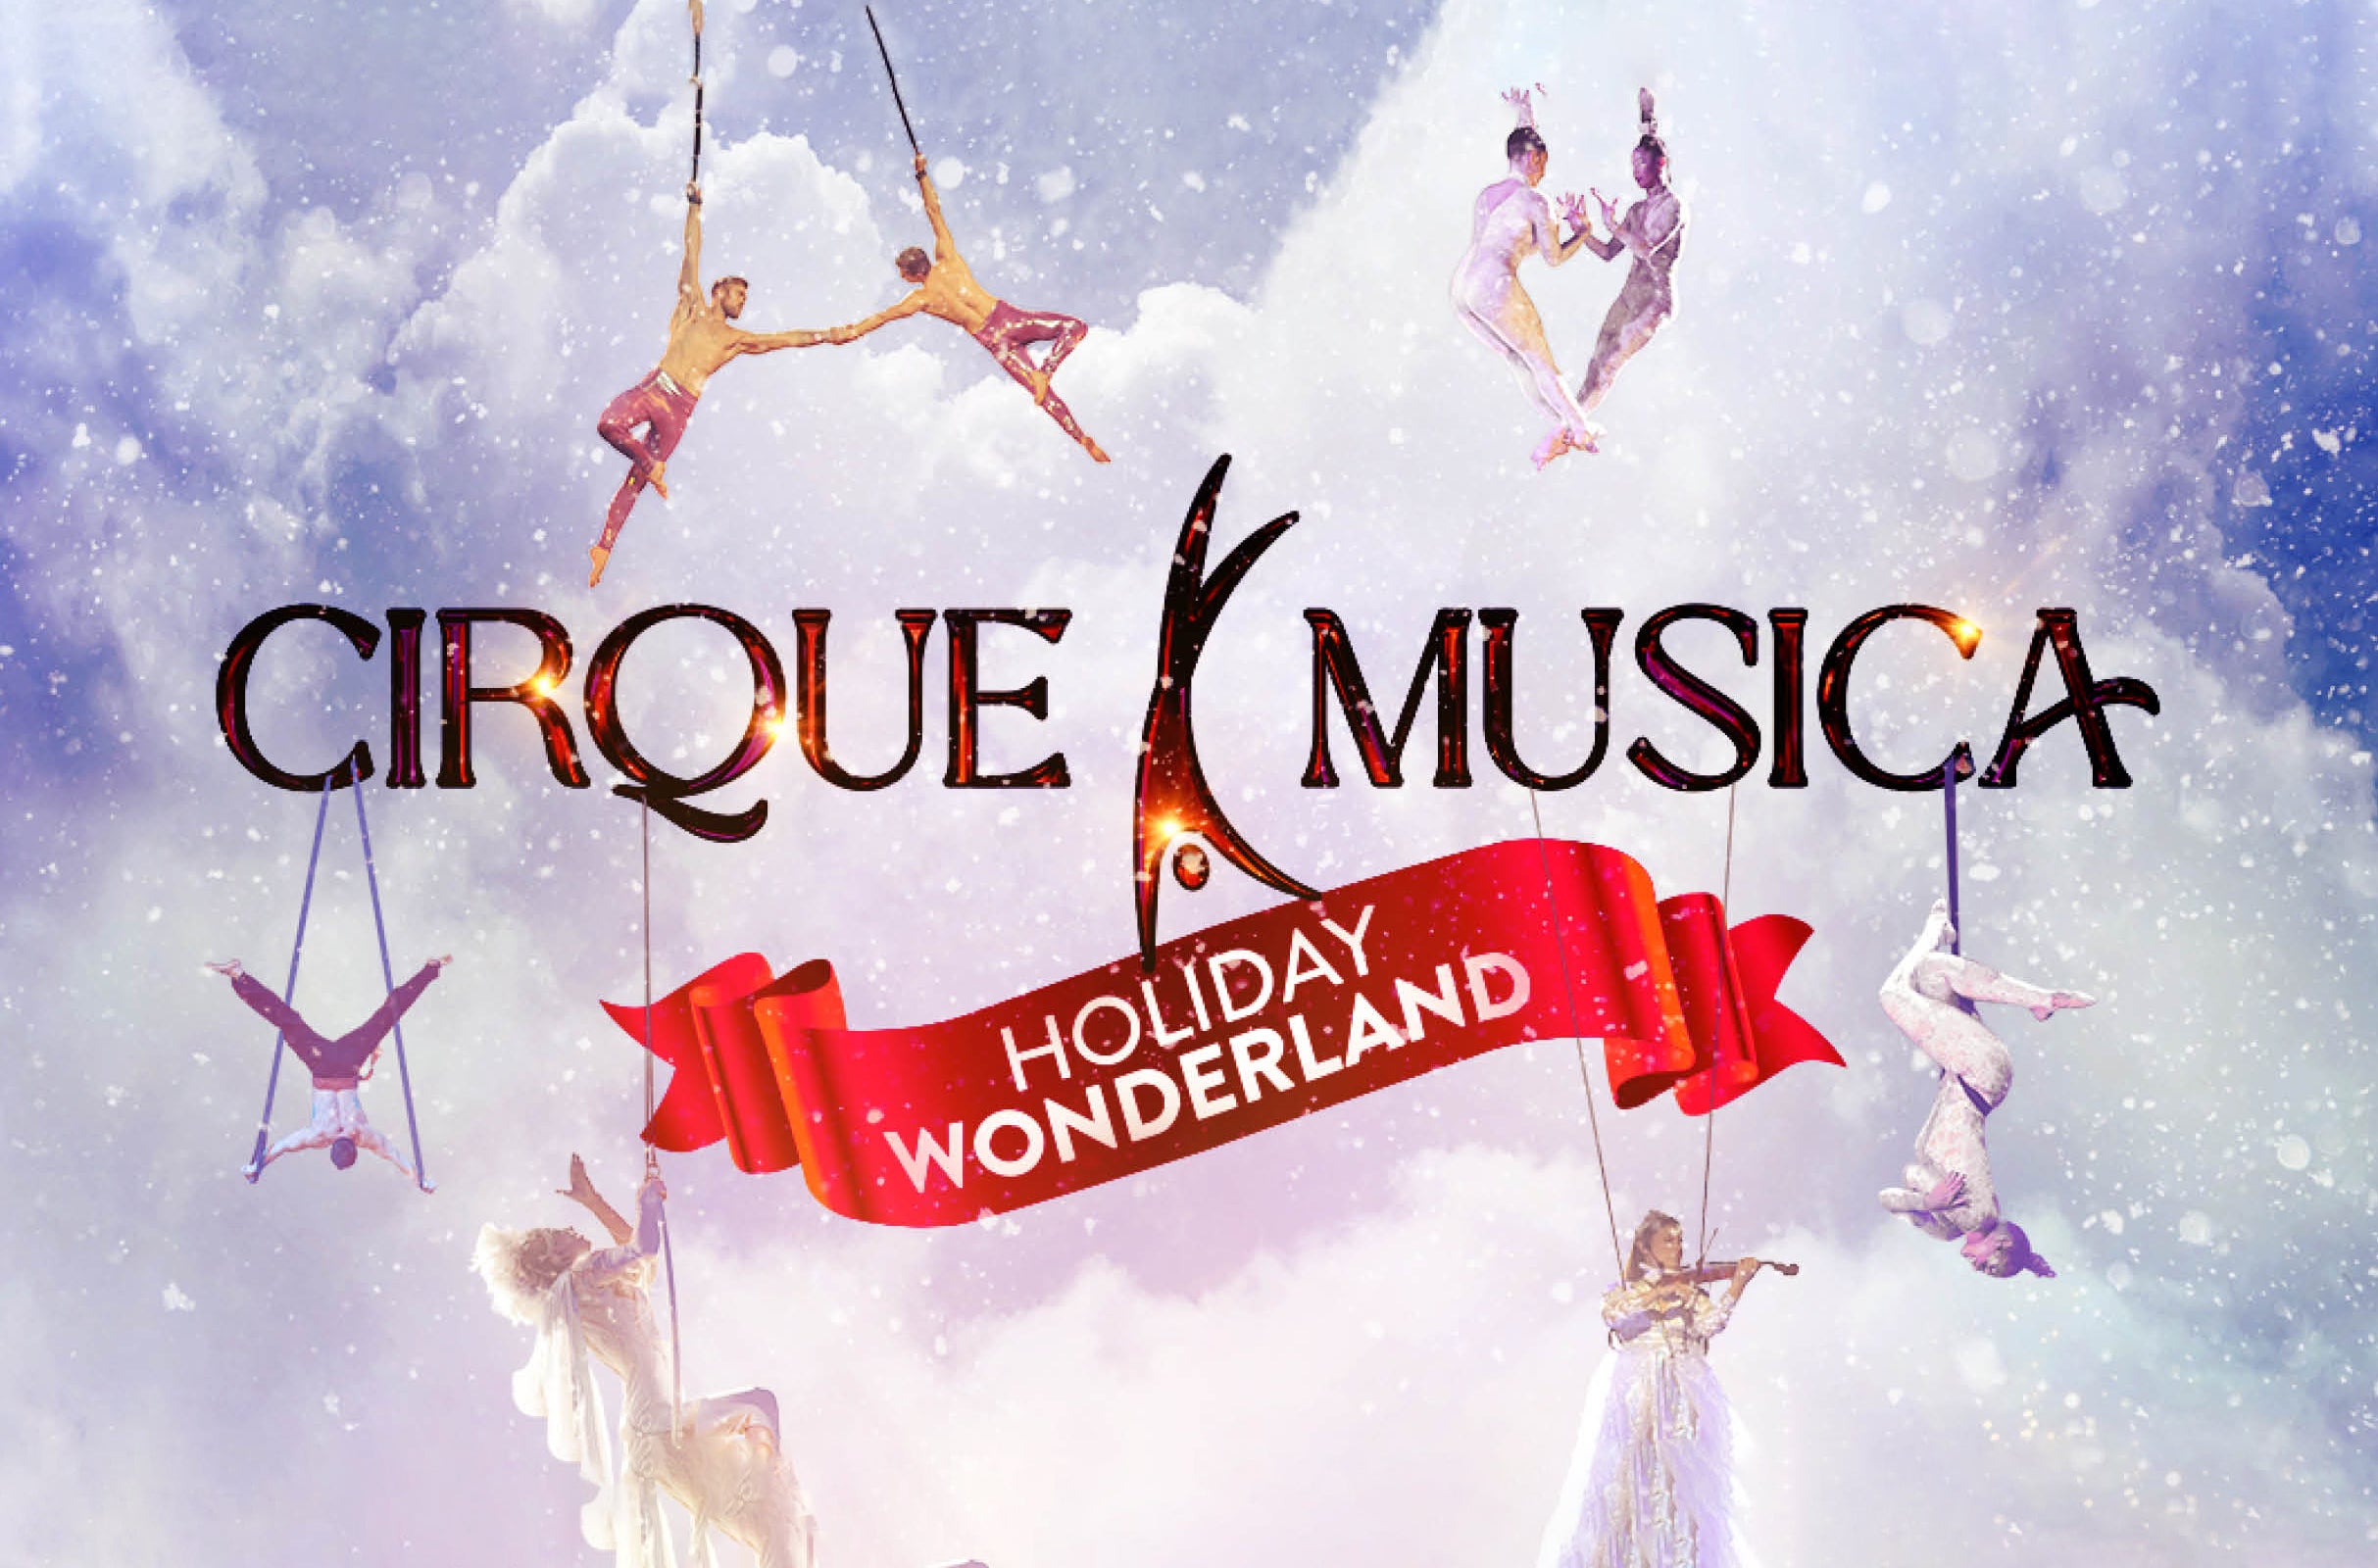 Cirque Musica Holiday Wonderland free presale code for performance tickets in Niagara Falls, NY (Seneca Niagara Resort & Casino Event Center)